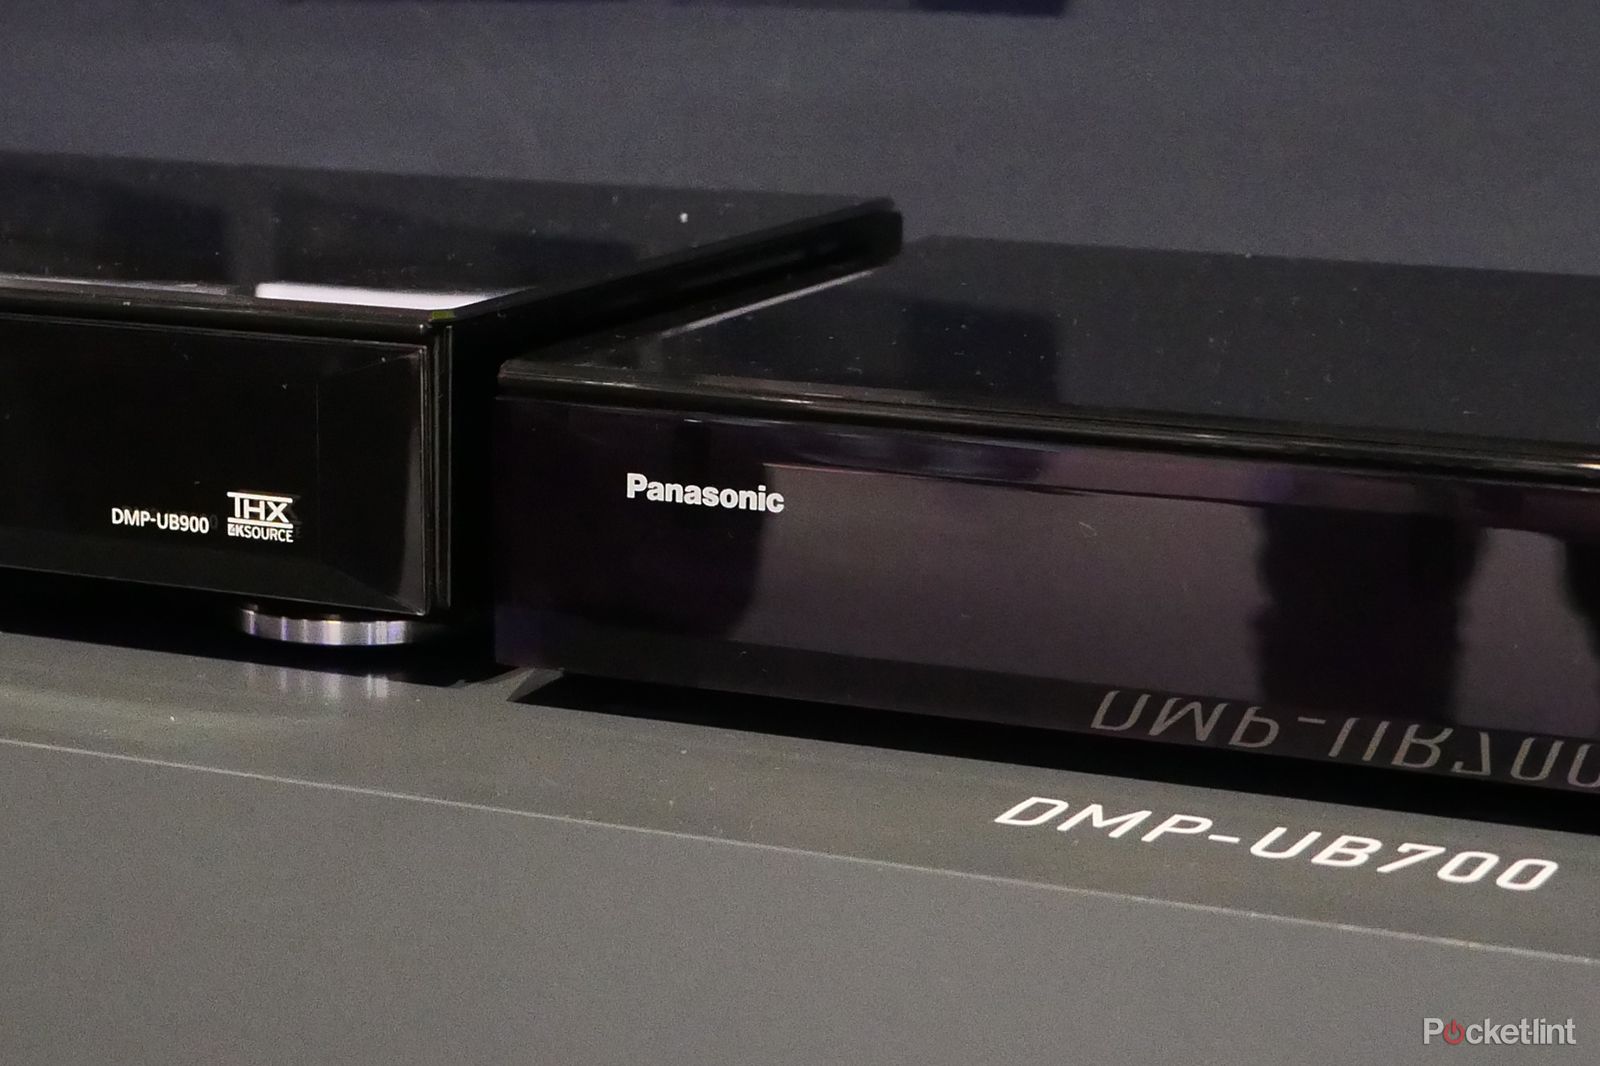 panasonic ub700 4k uhd blu ray player takes on samsung ubd k8500 in price wars image 3